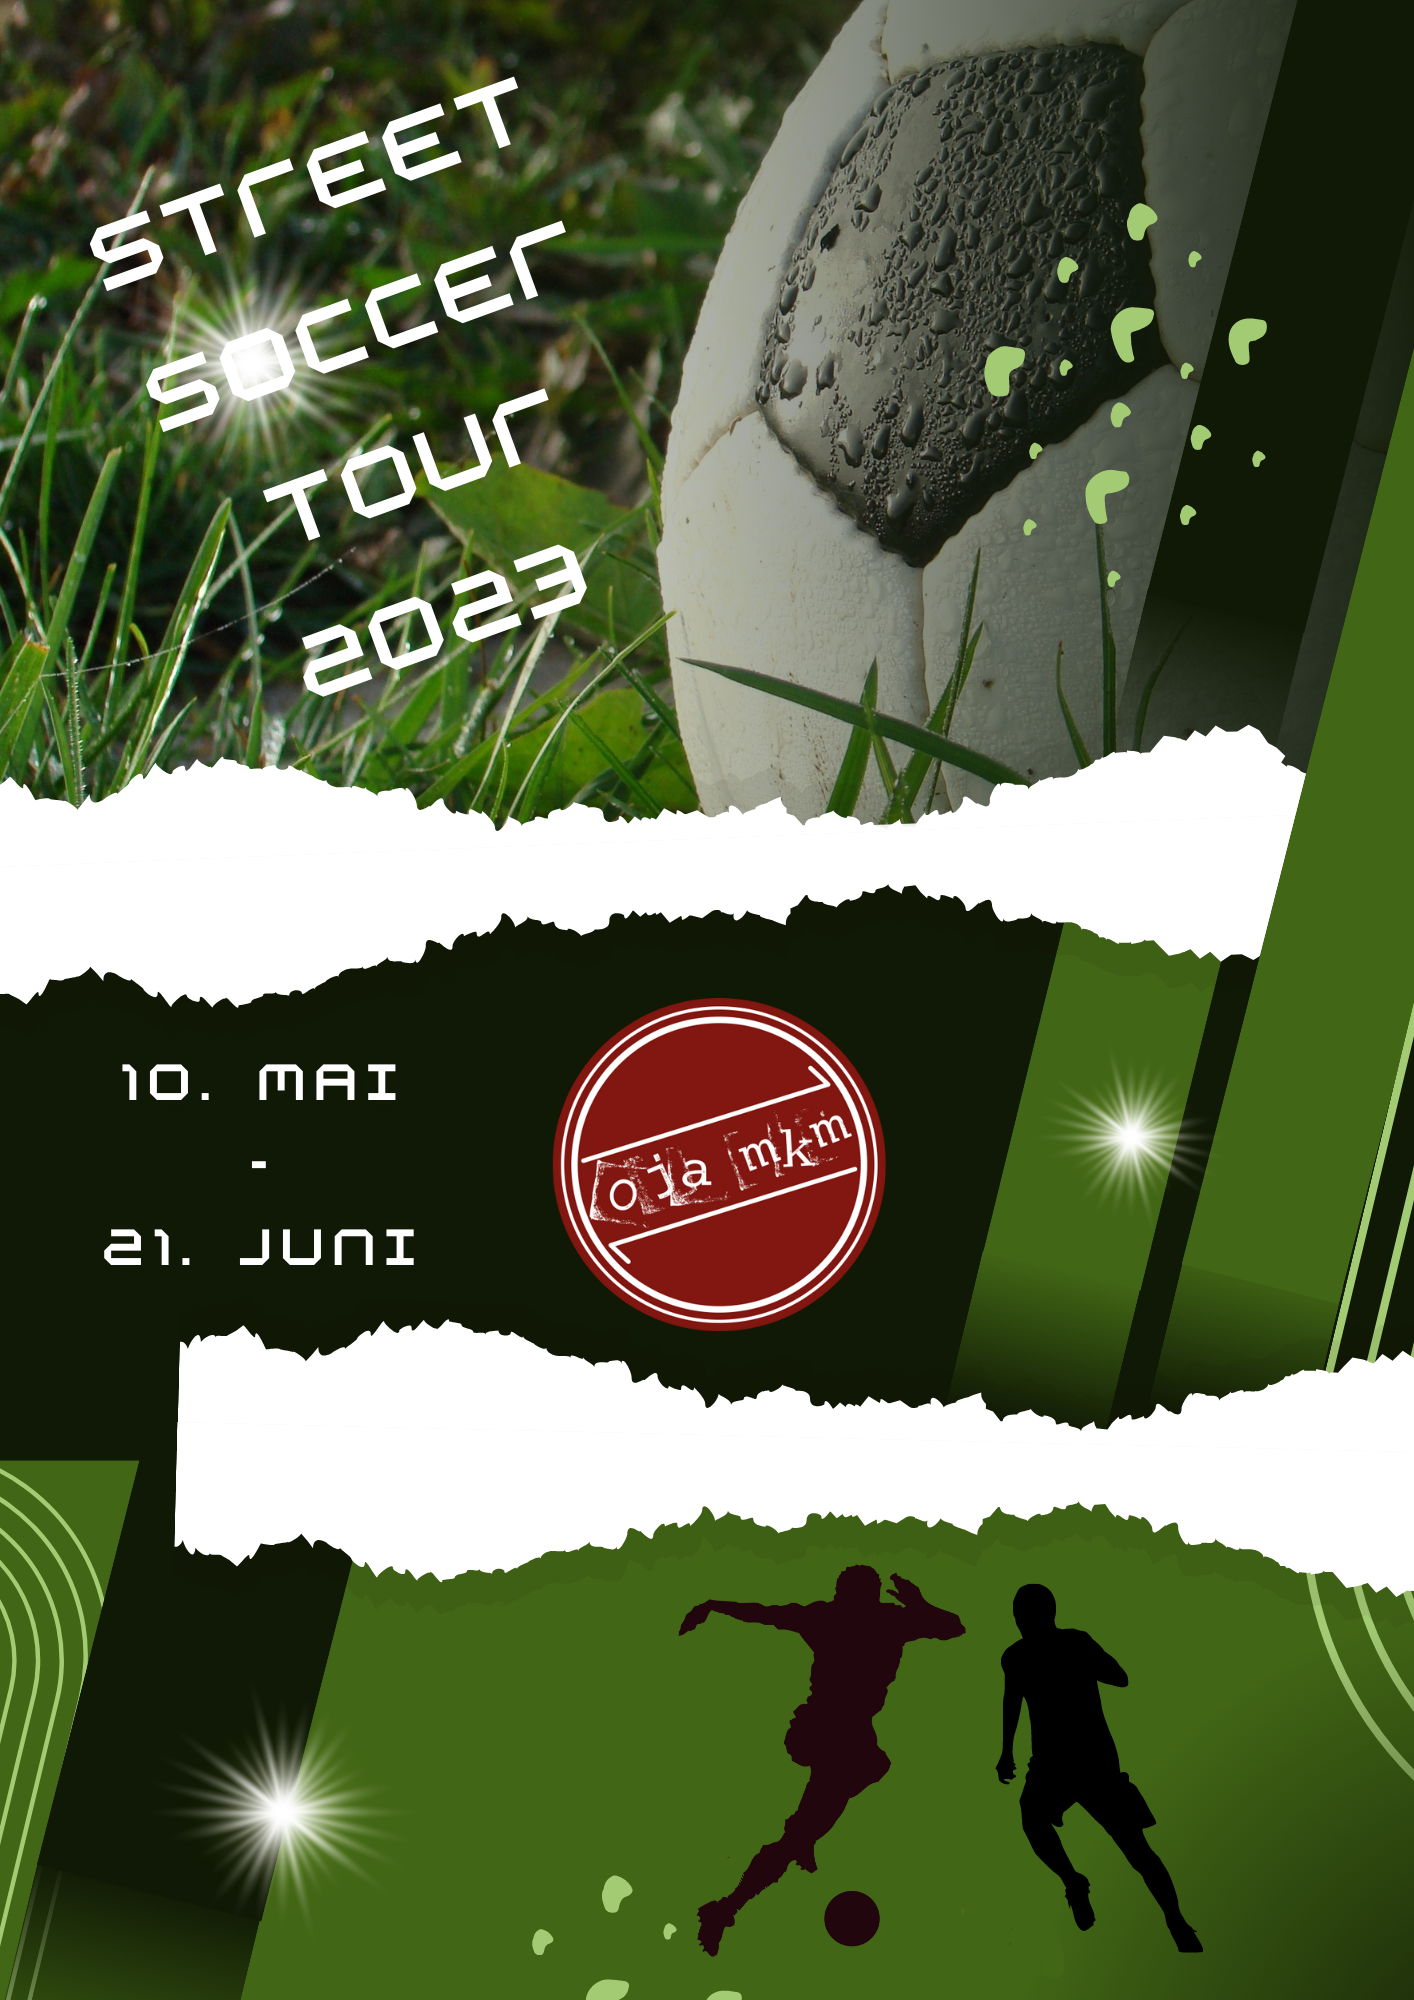 Street Soccer Tour 2023